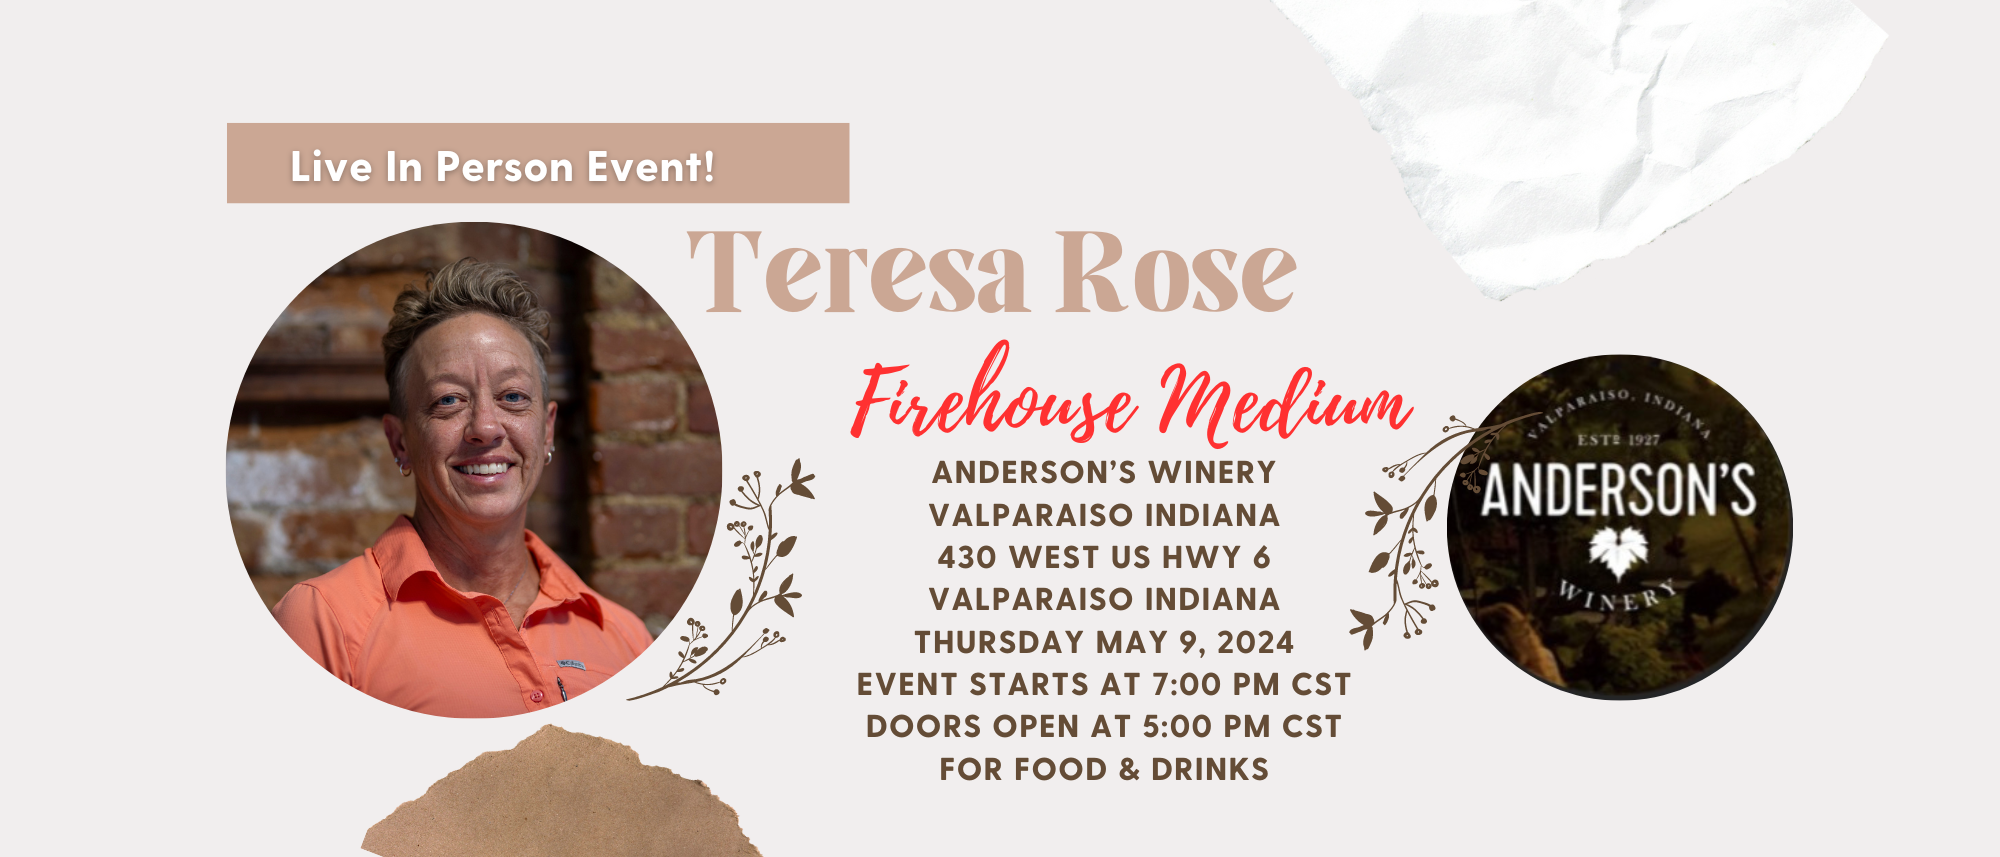 Teresa Rose Firehouse Medium at Anderson's Winery